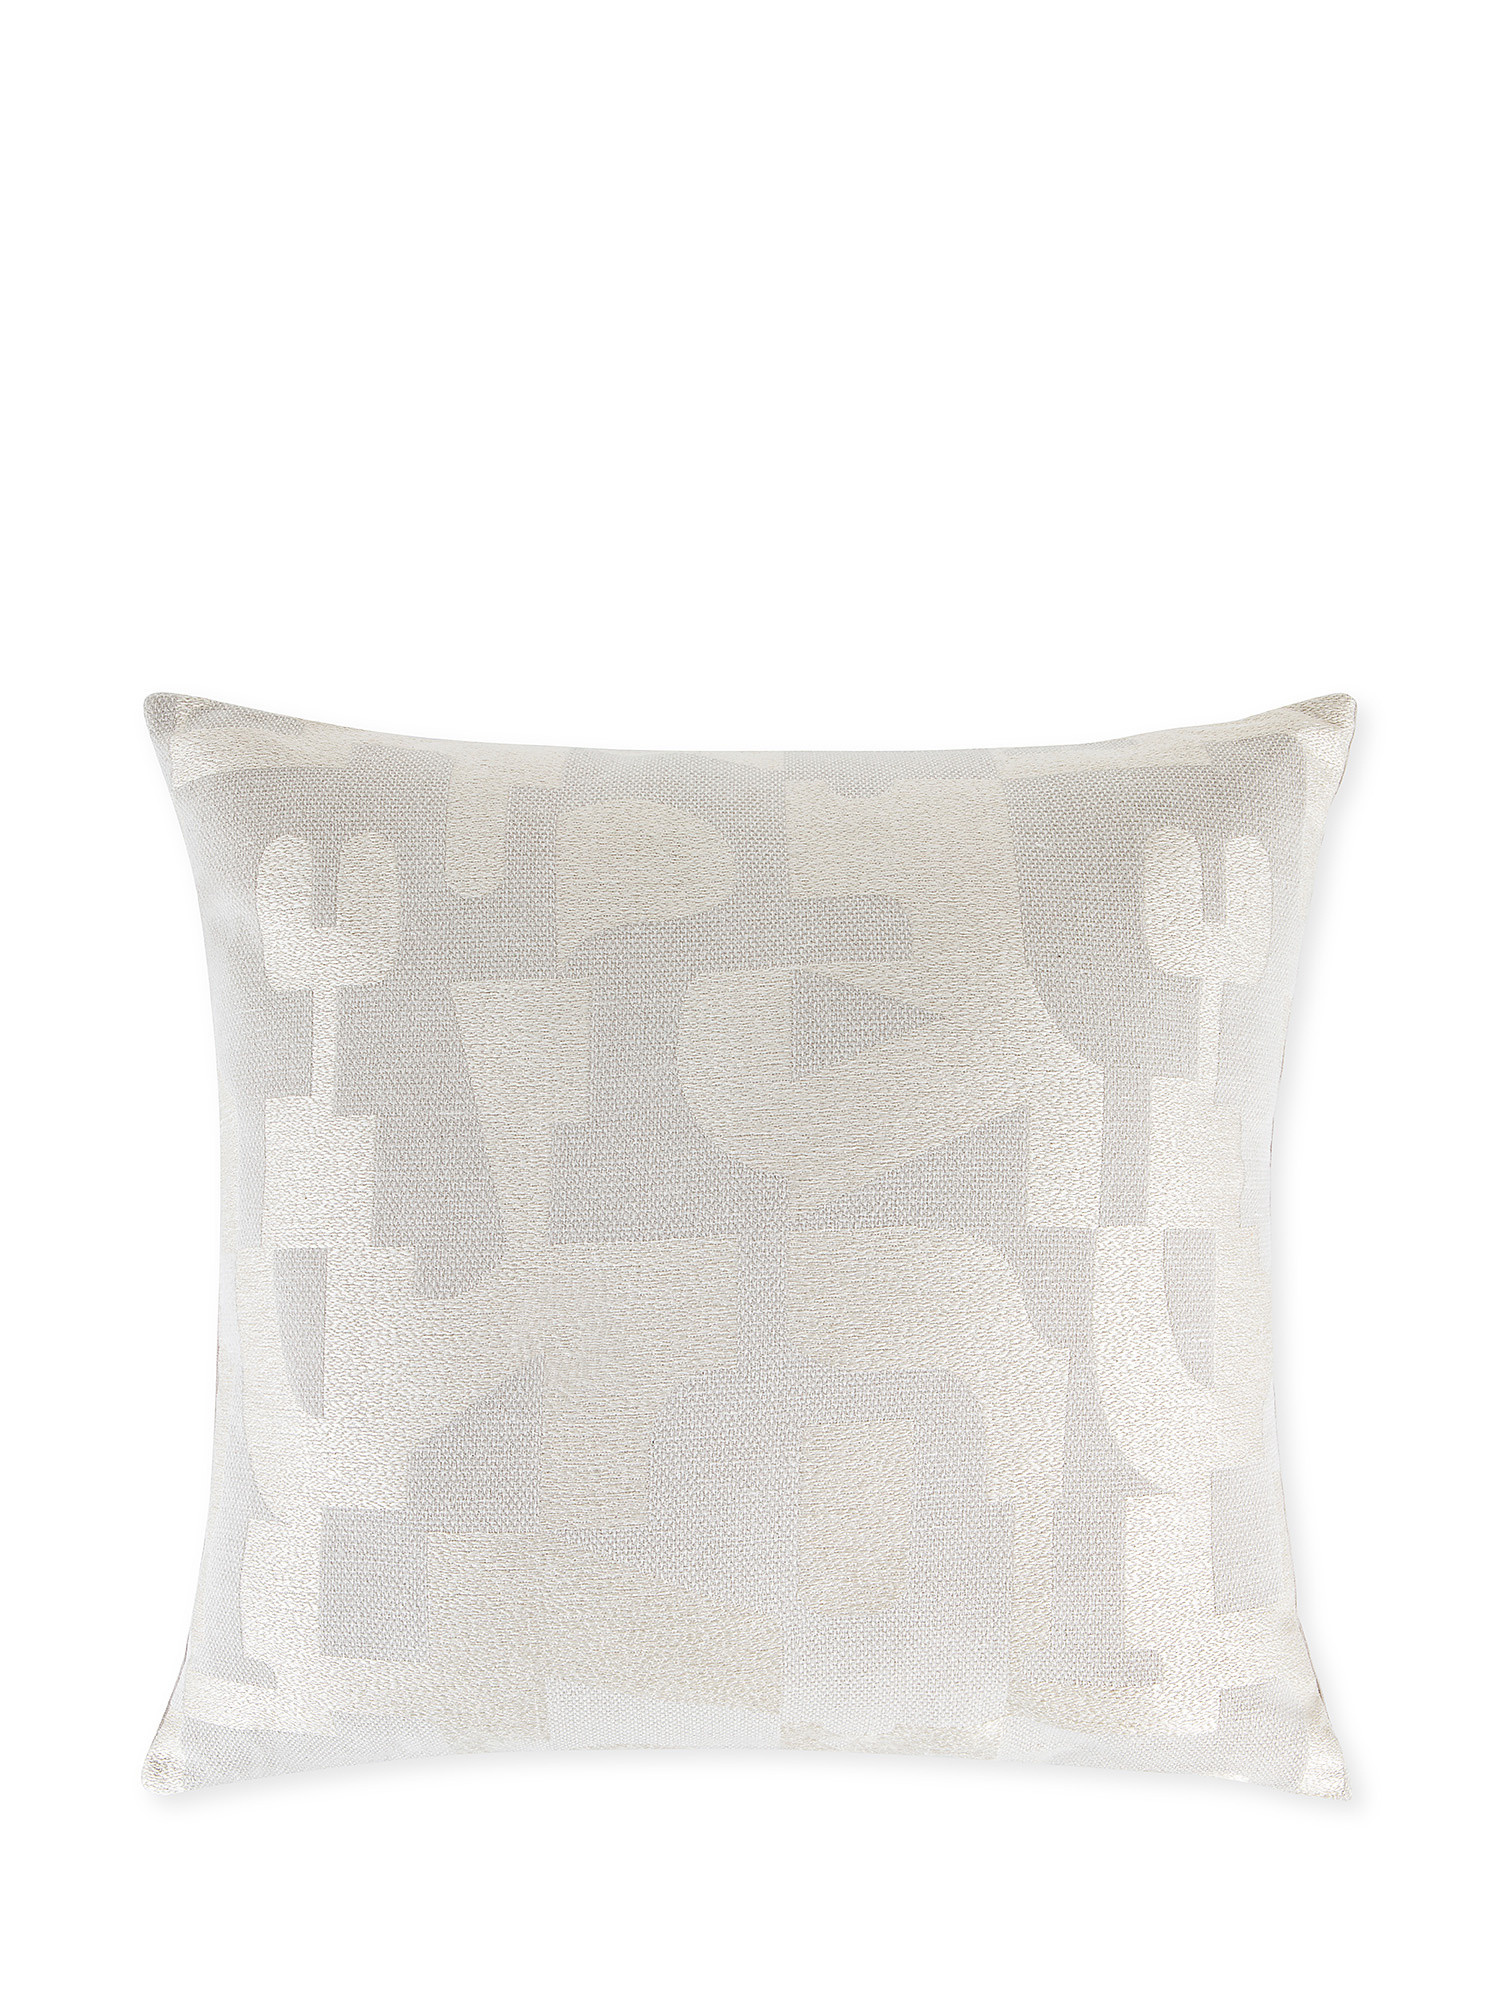 Jacquard cushion with geometric motif 50x50cm, Grey, large image number 0